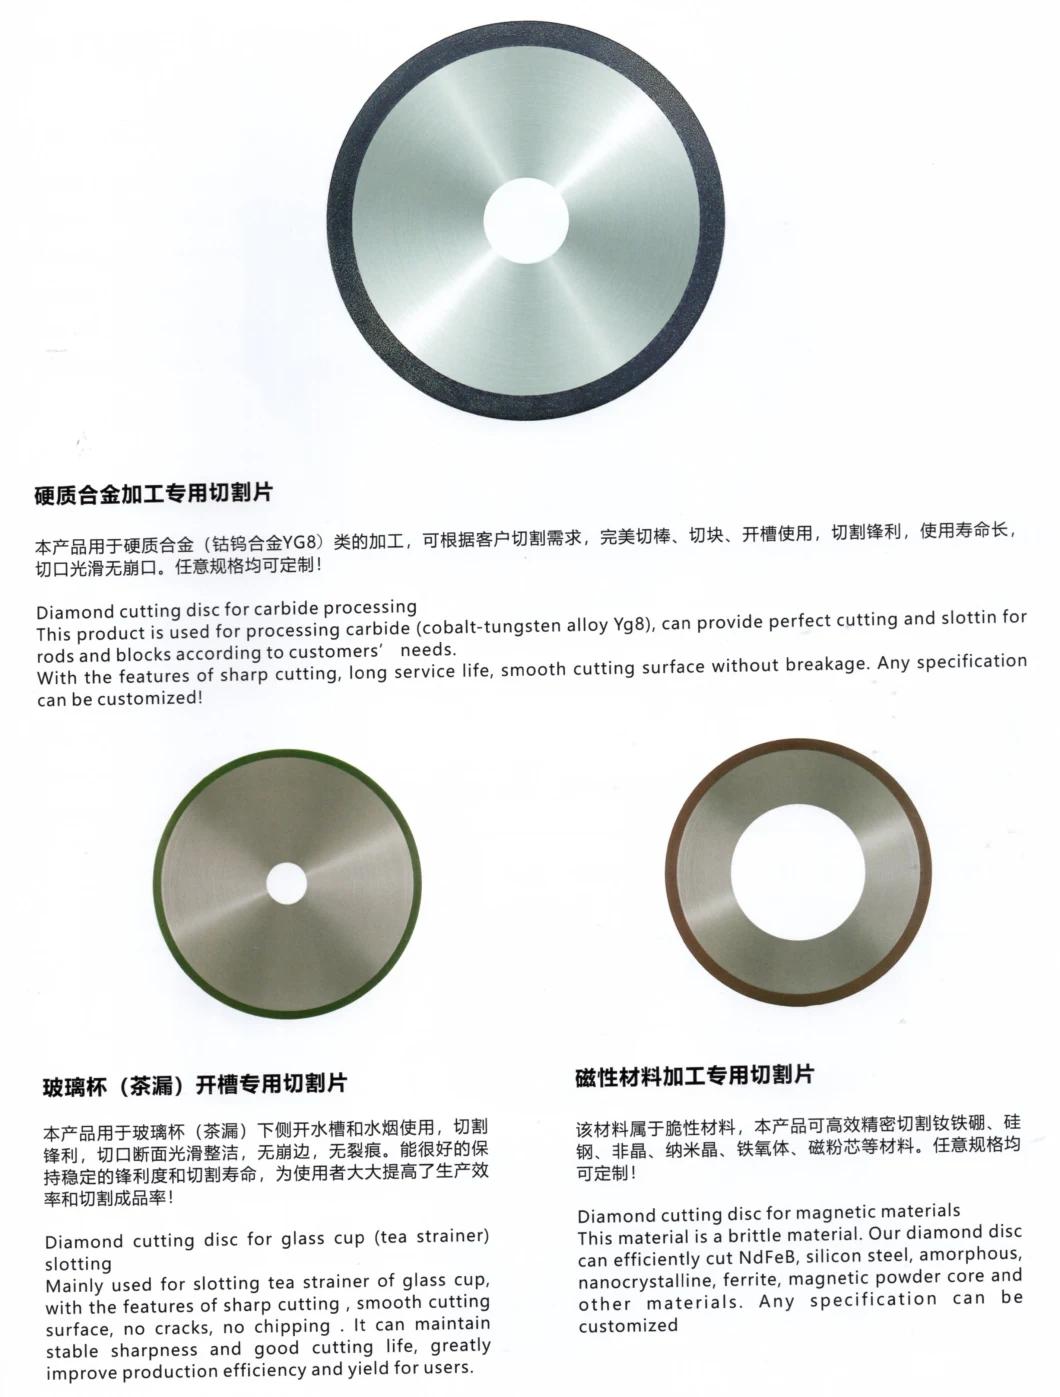 Metal Bond Ultrathin Diamond Cutting Disc for Alumina Ceramic